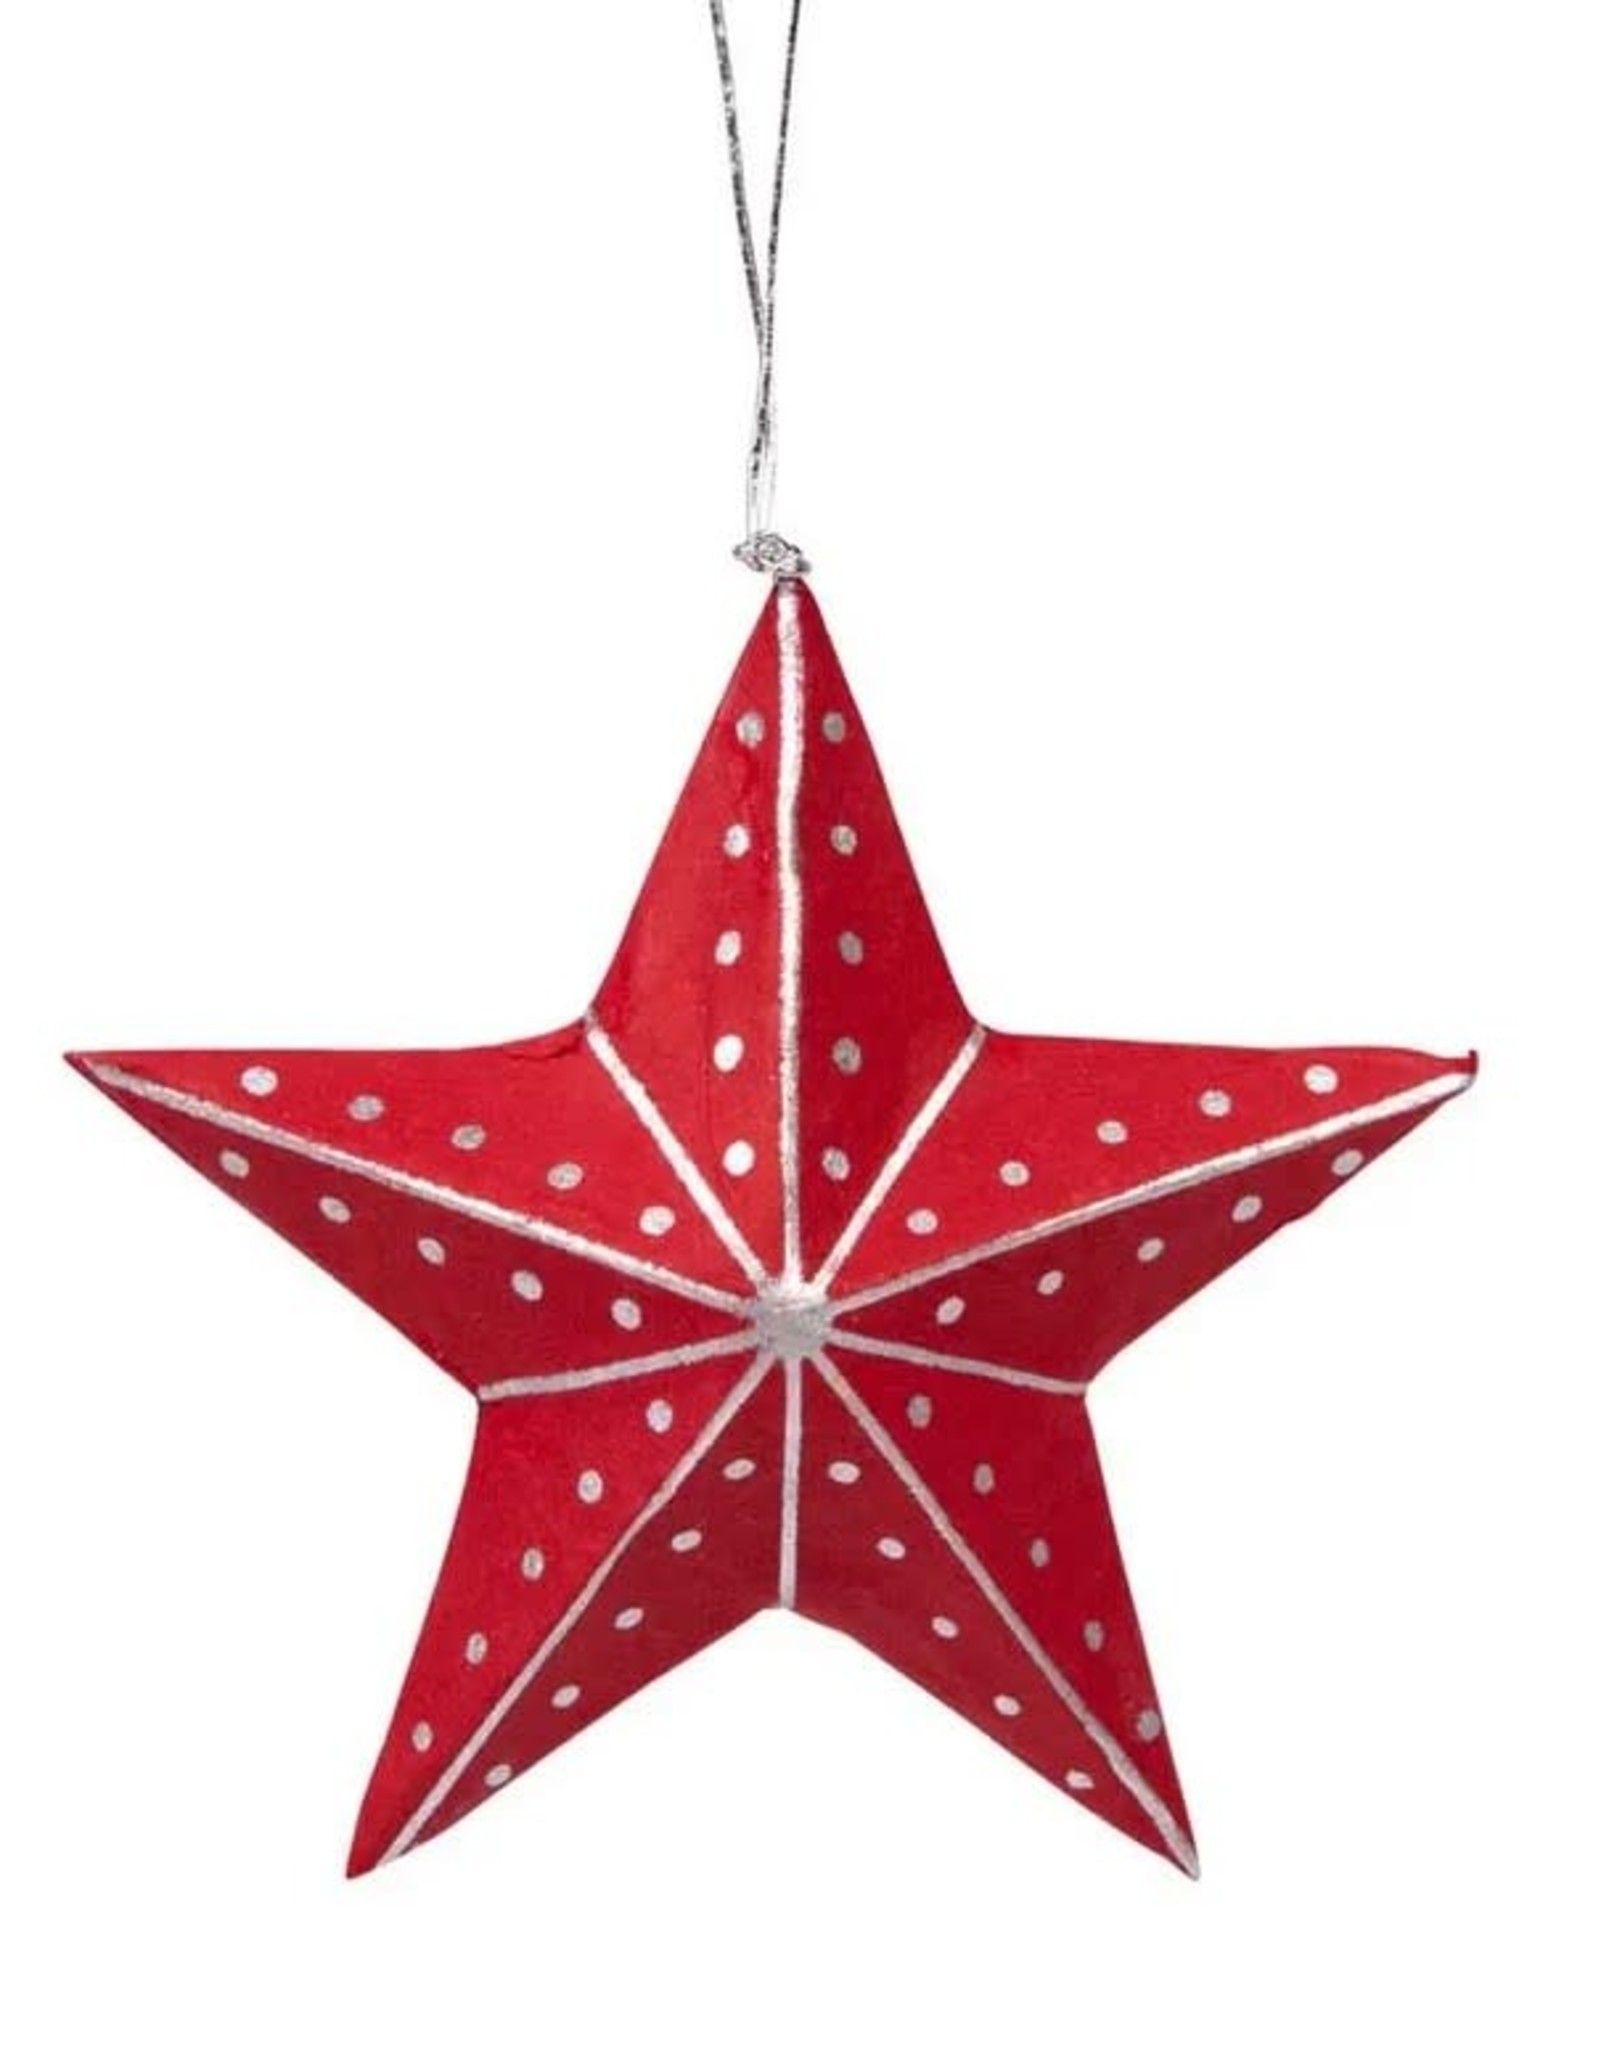 Ten Thousand Villages USA Ornament Red & Silver Star - Bangladesh (Prokritee)